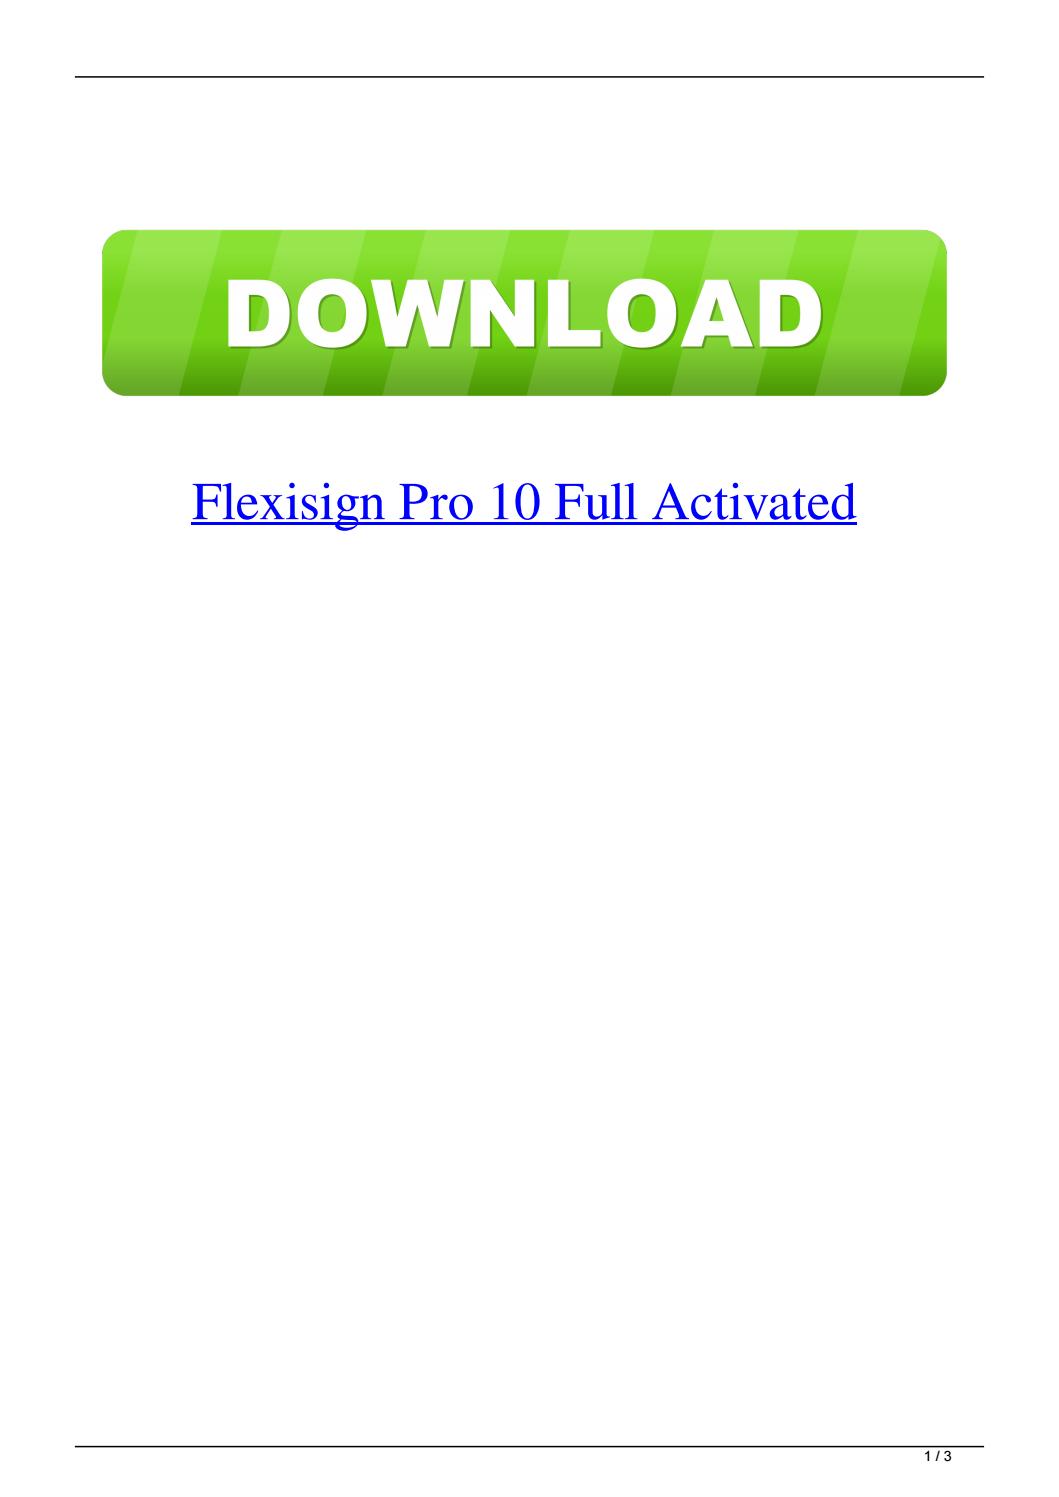 flexi 10 crack free download